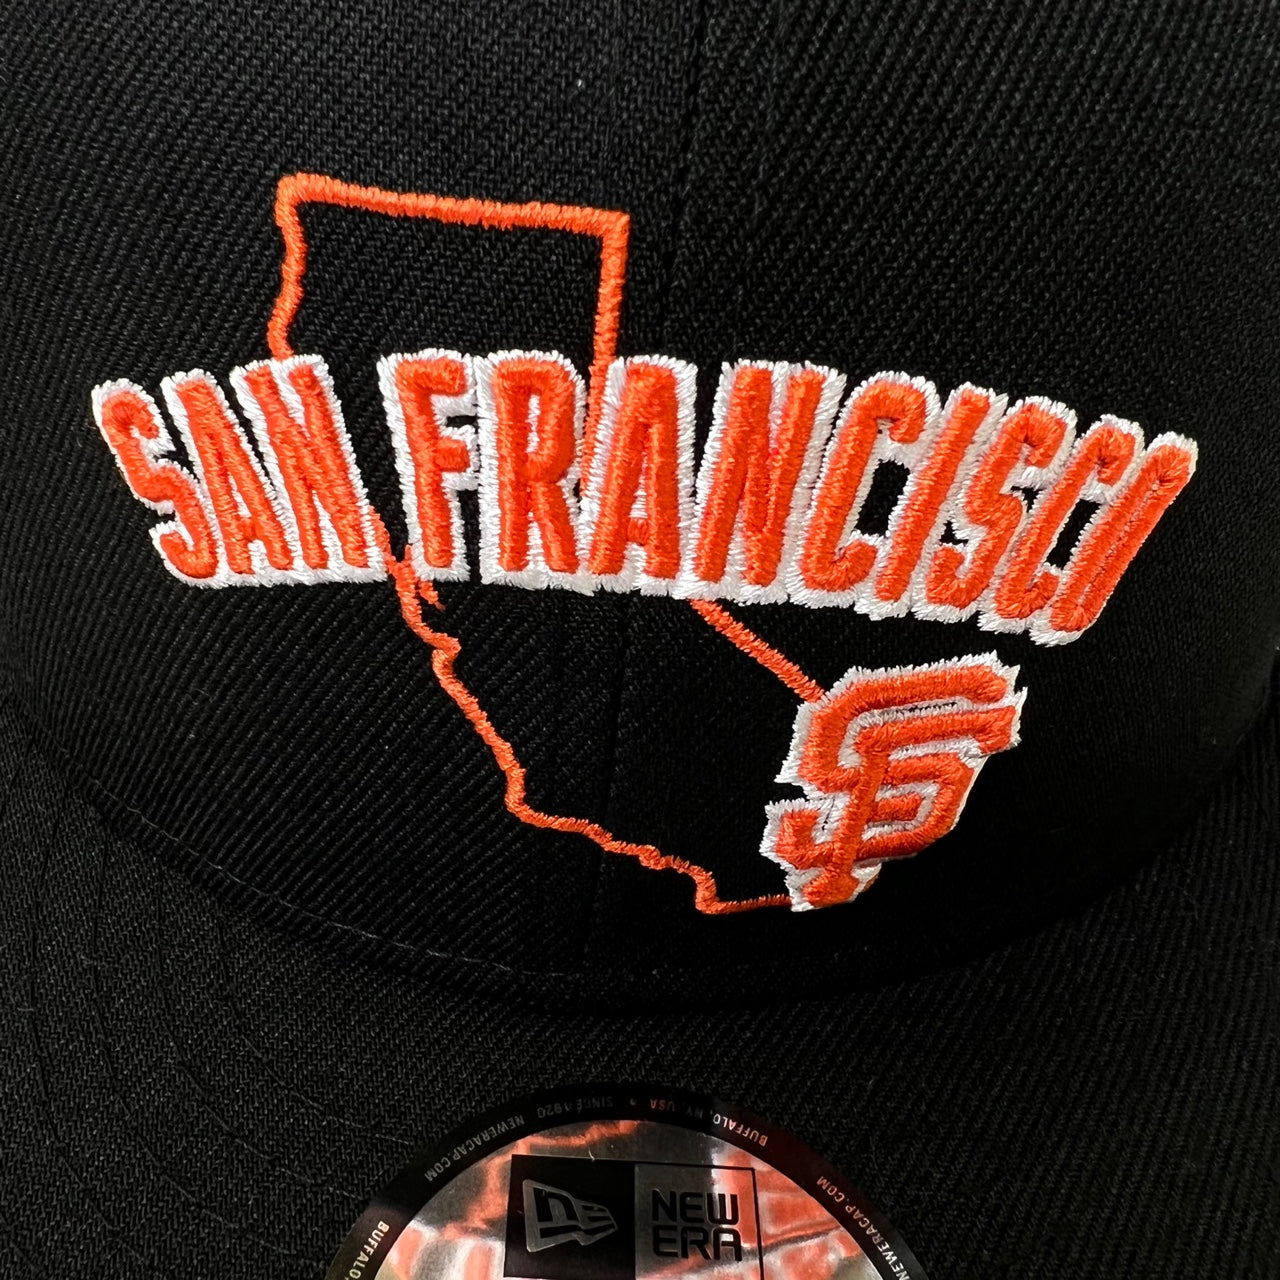 New Era San Fransisco Giants 9FIFTY Snapback Hat